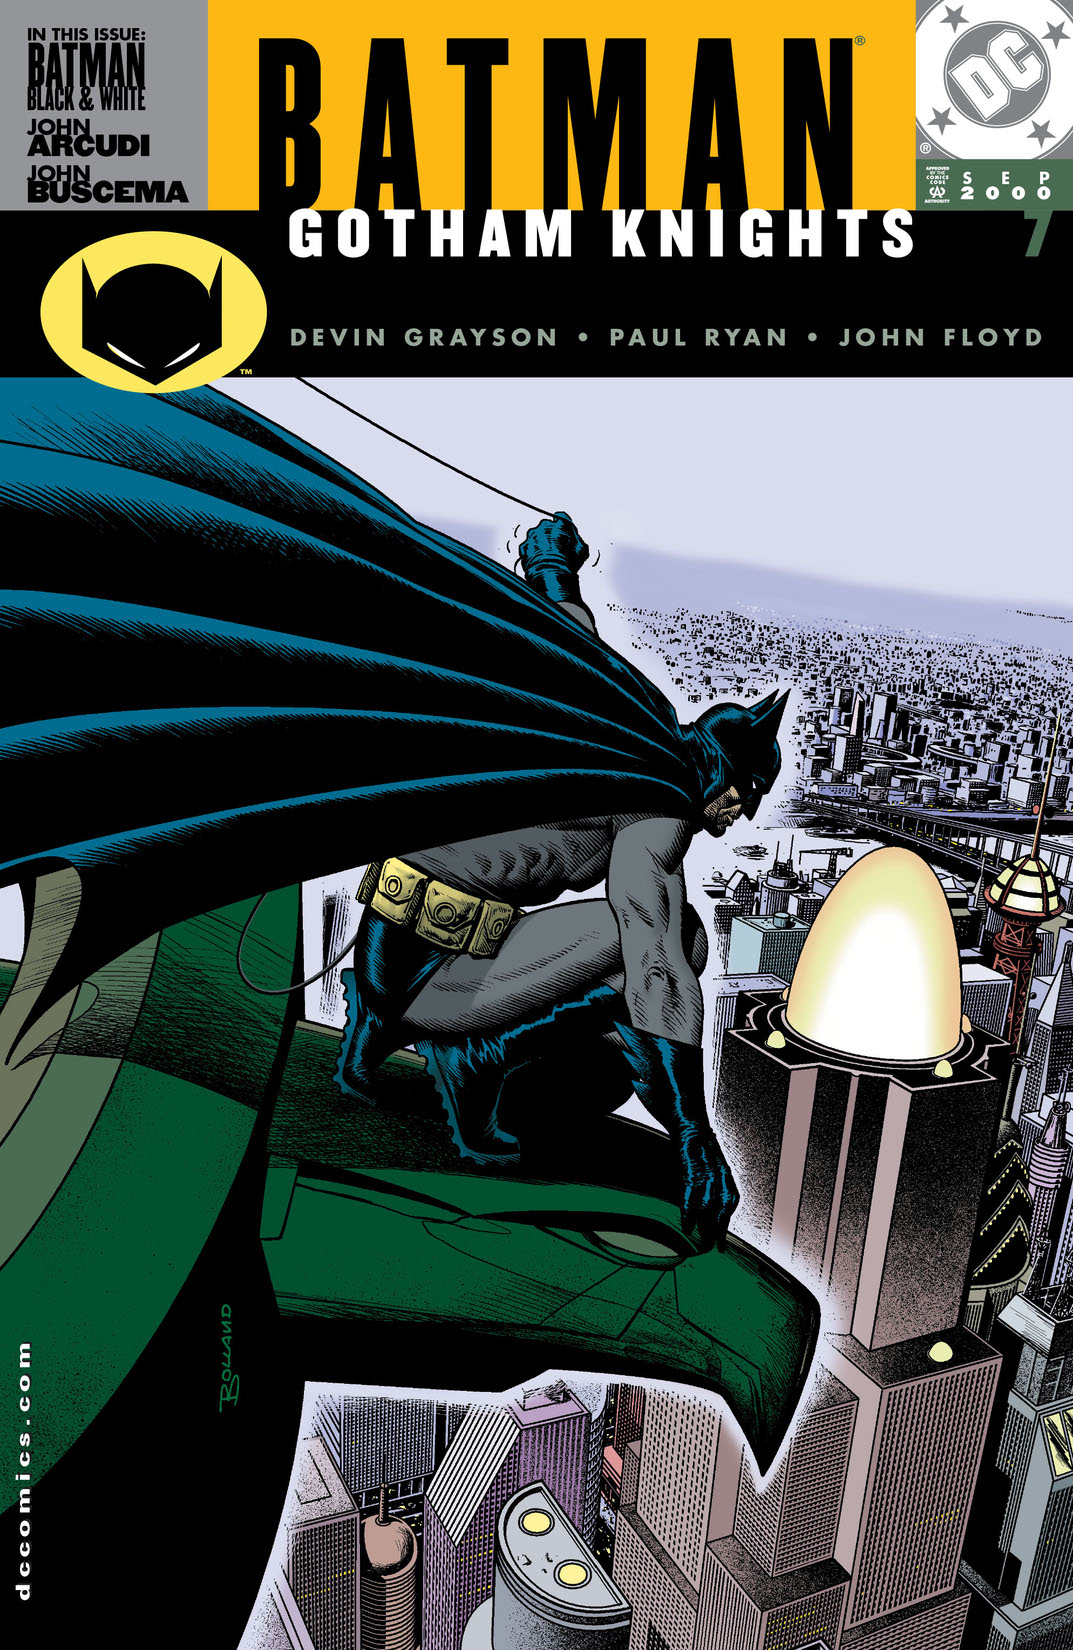 Batman: Gotham Knights #7 preview images